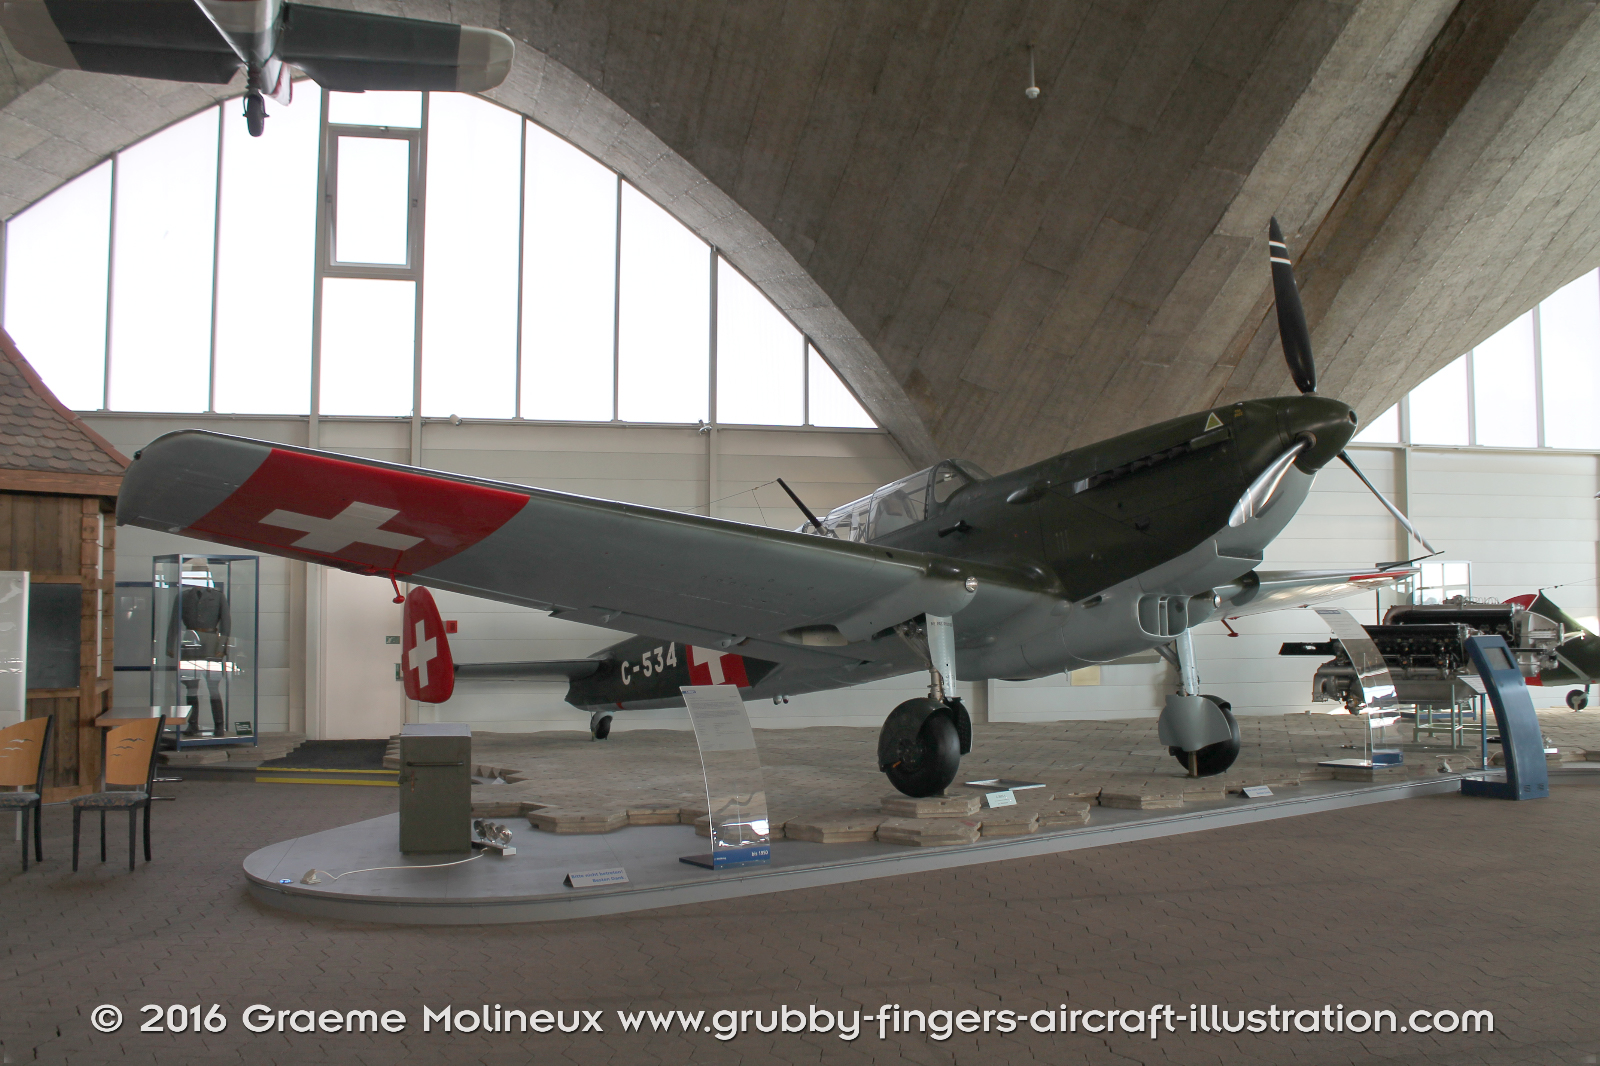 K+W_C-36_C-534_Swiss_Air_Force_Museum_2015_01_GrubbyFingers